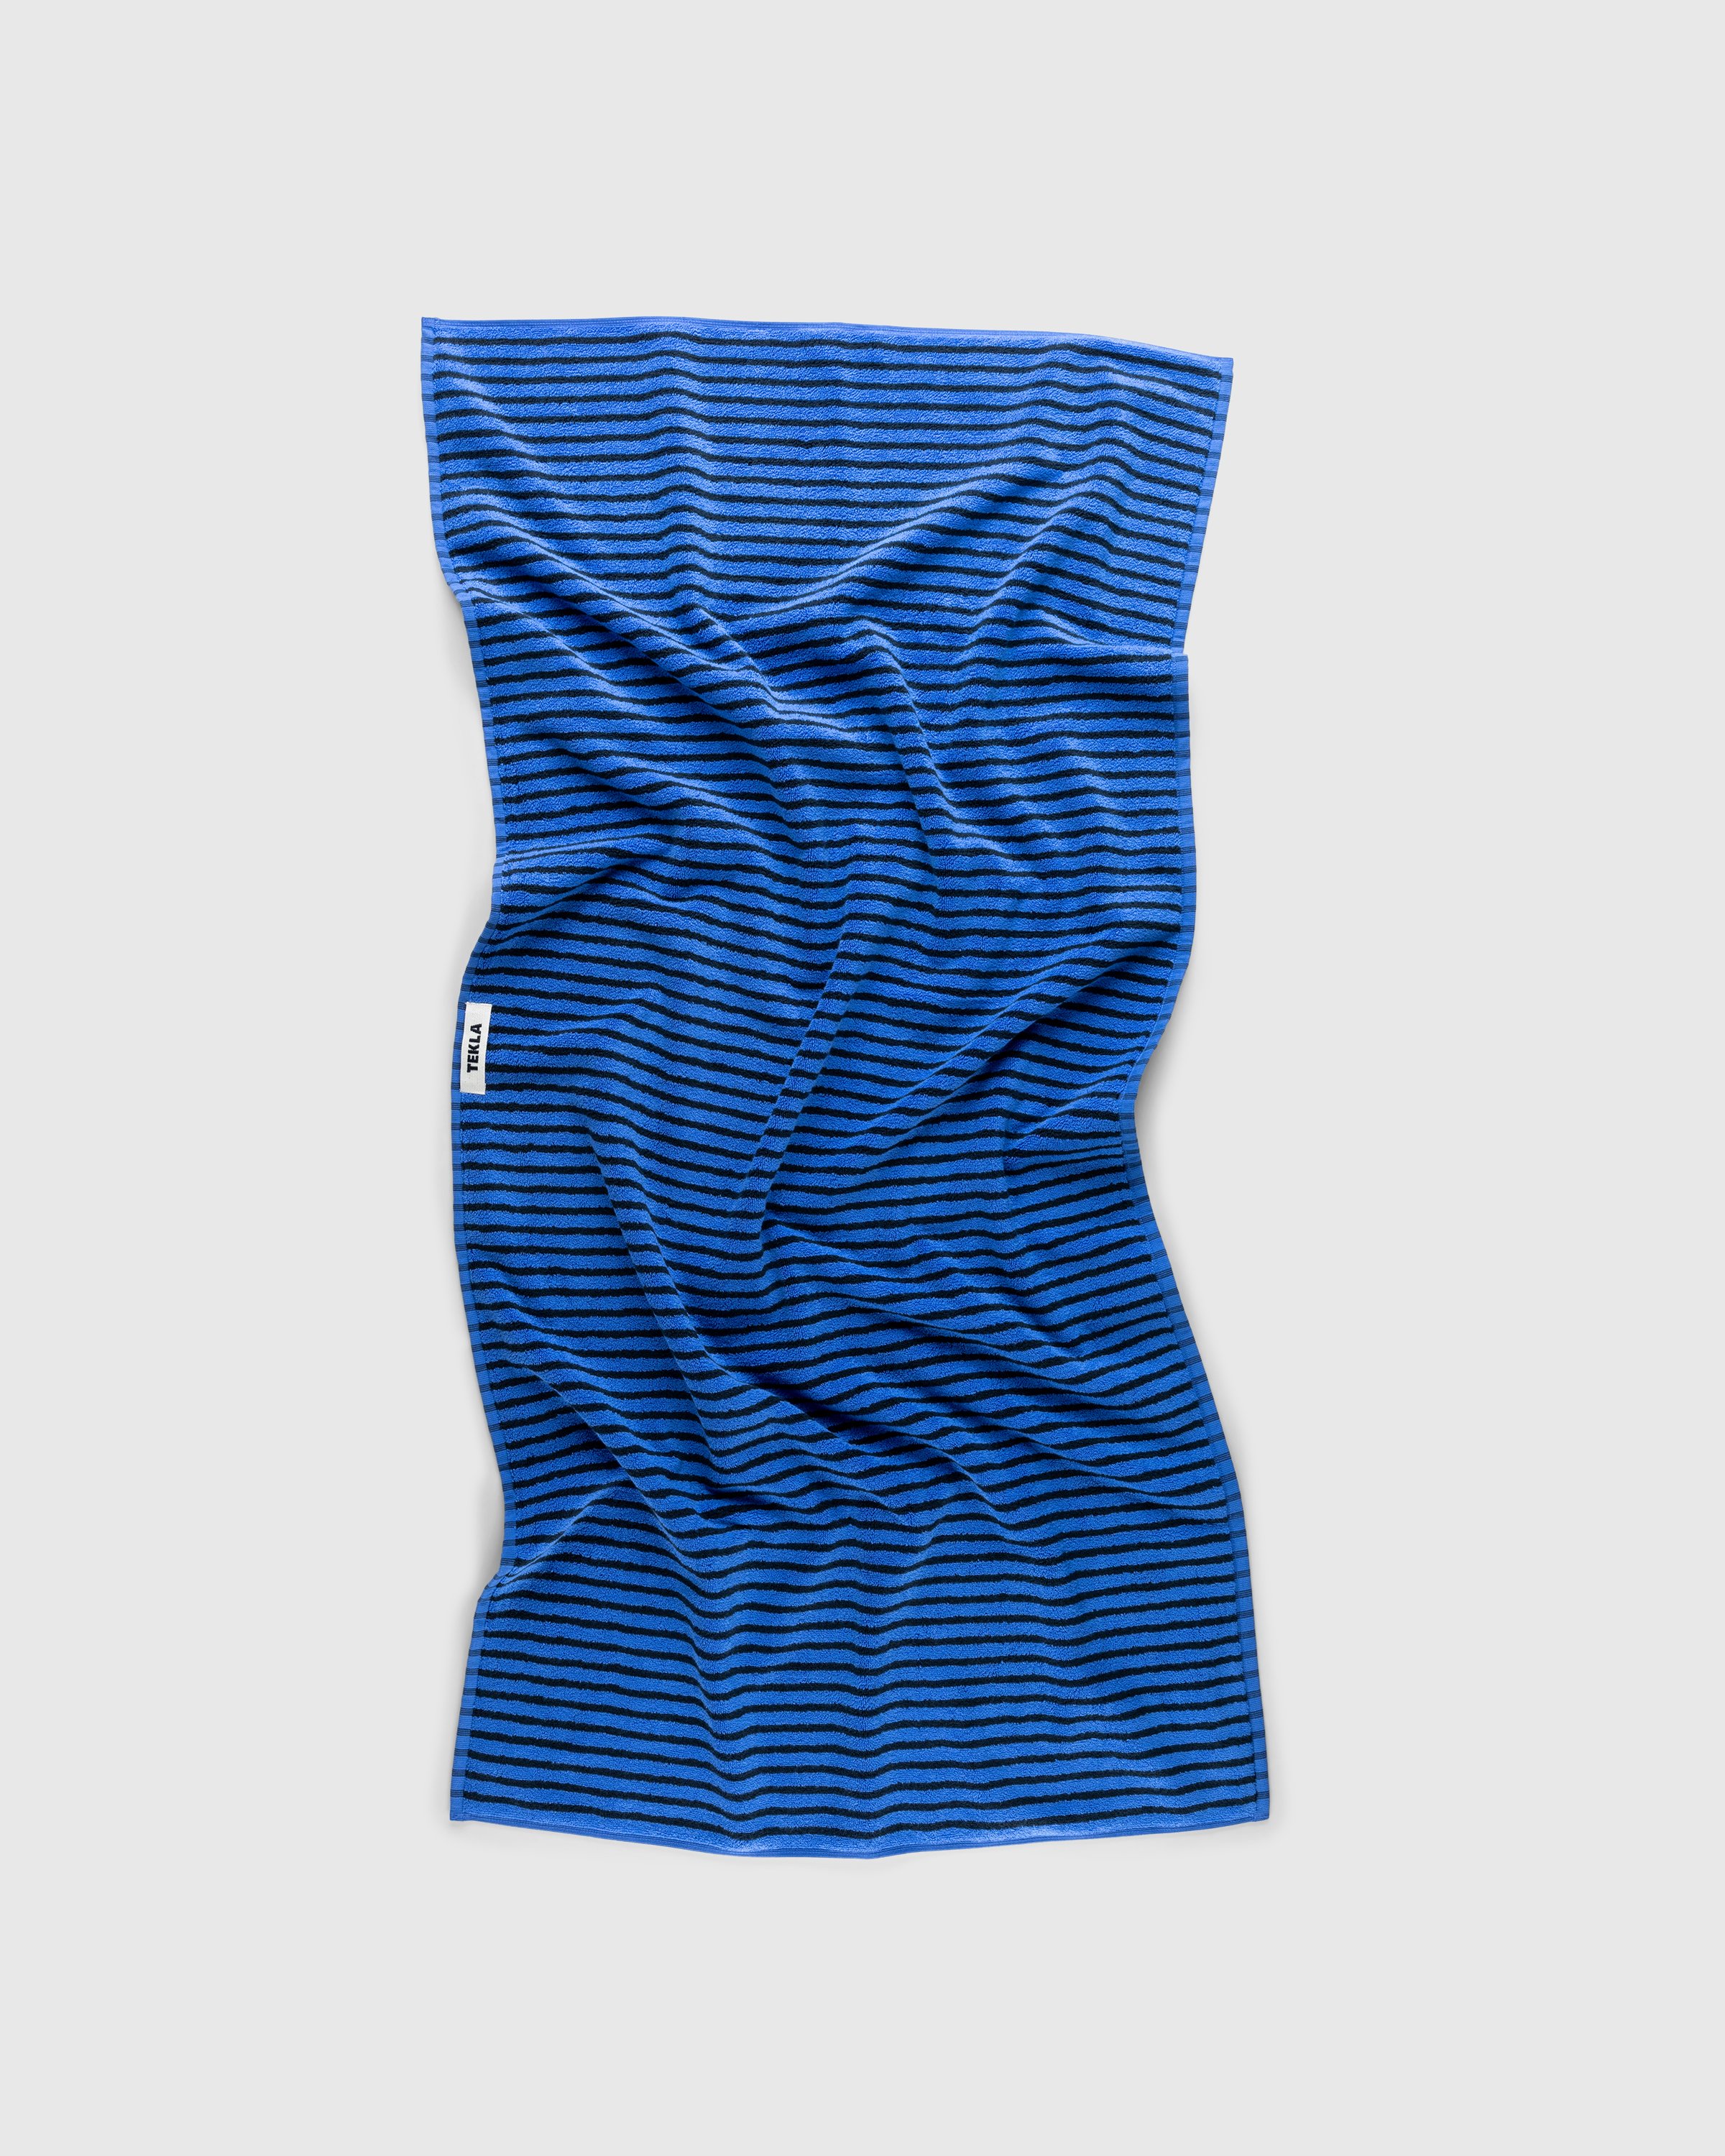 Tekla - Bath Towel Blue&Black - Lifestyle - Blue - Image 1